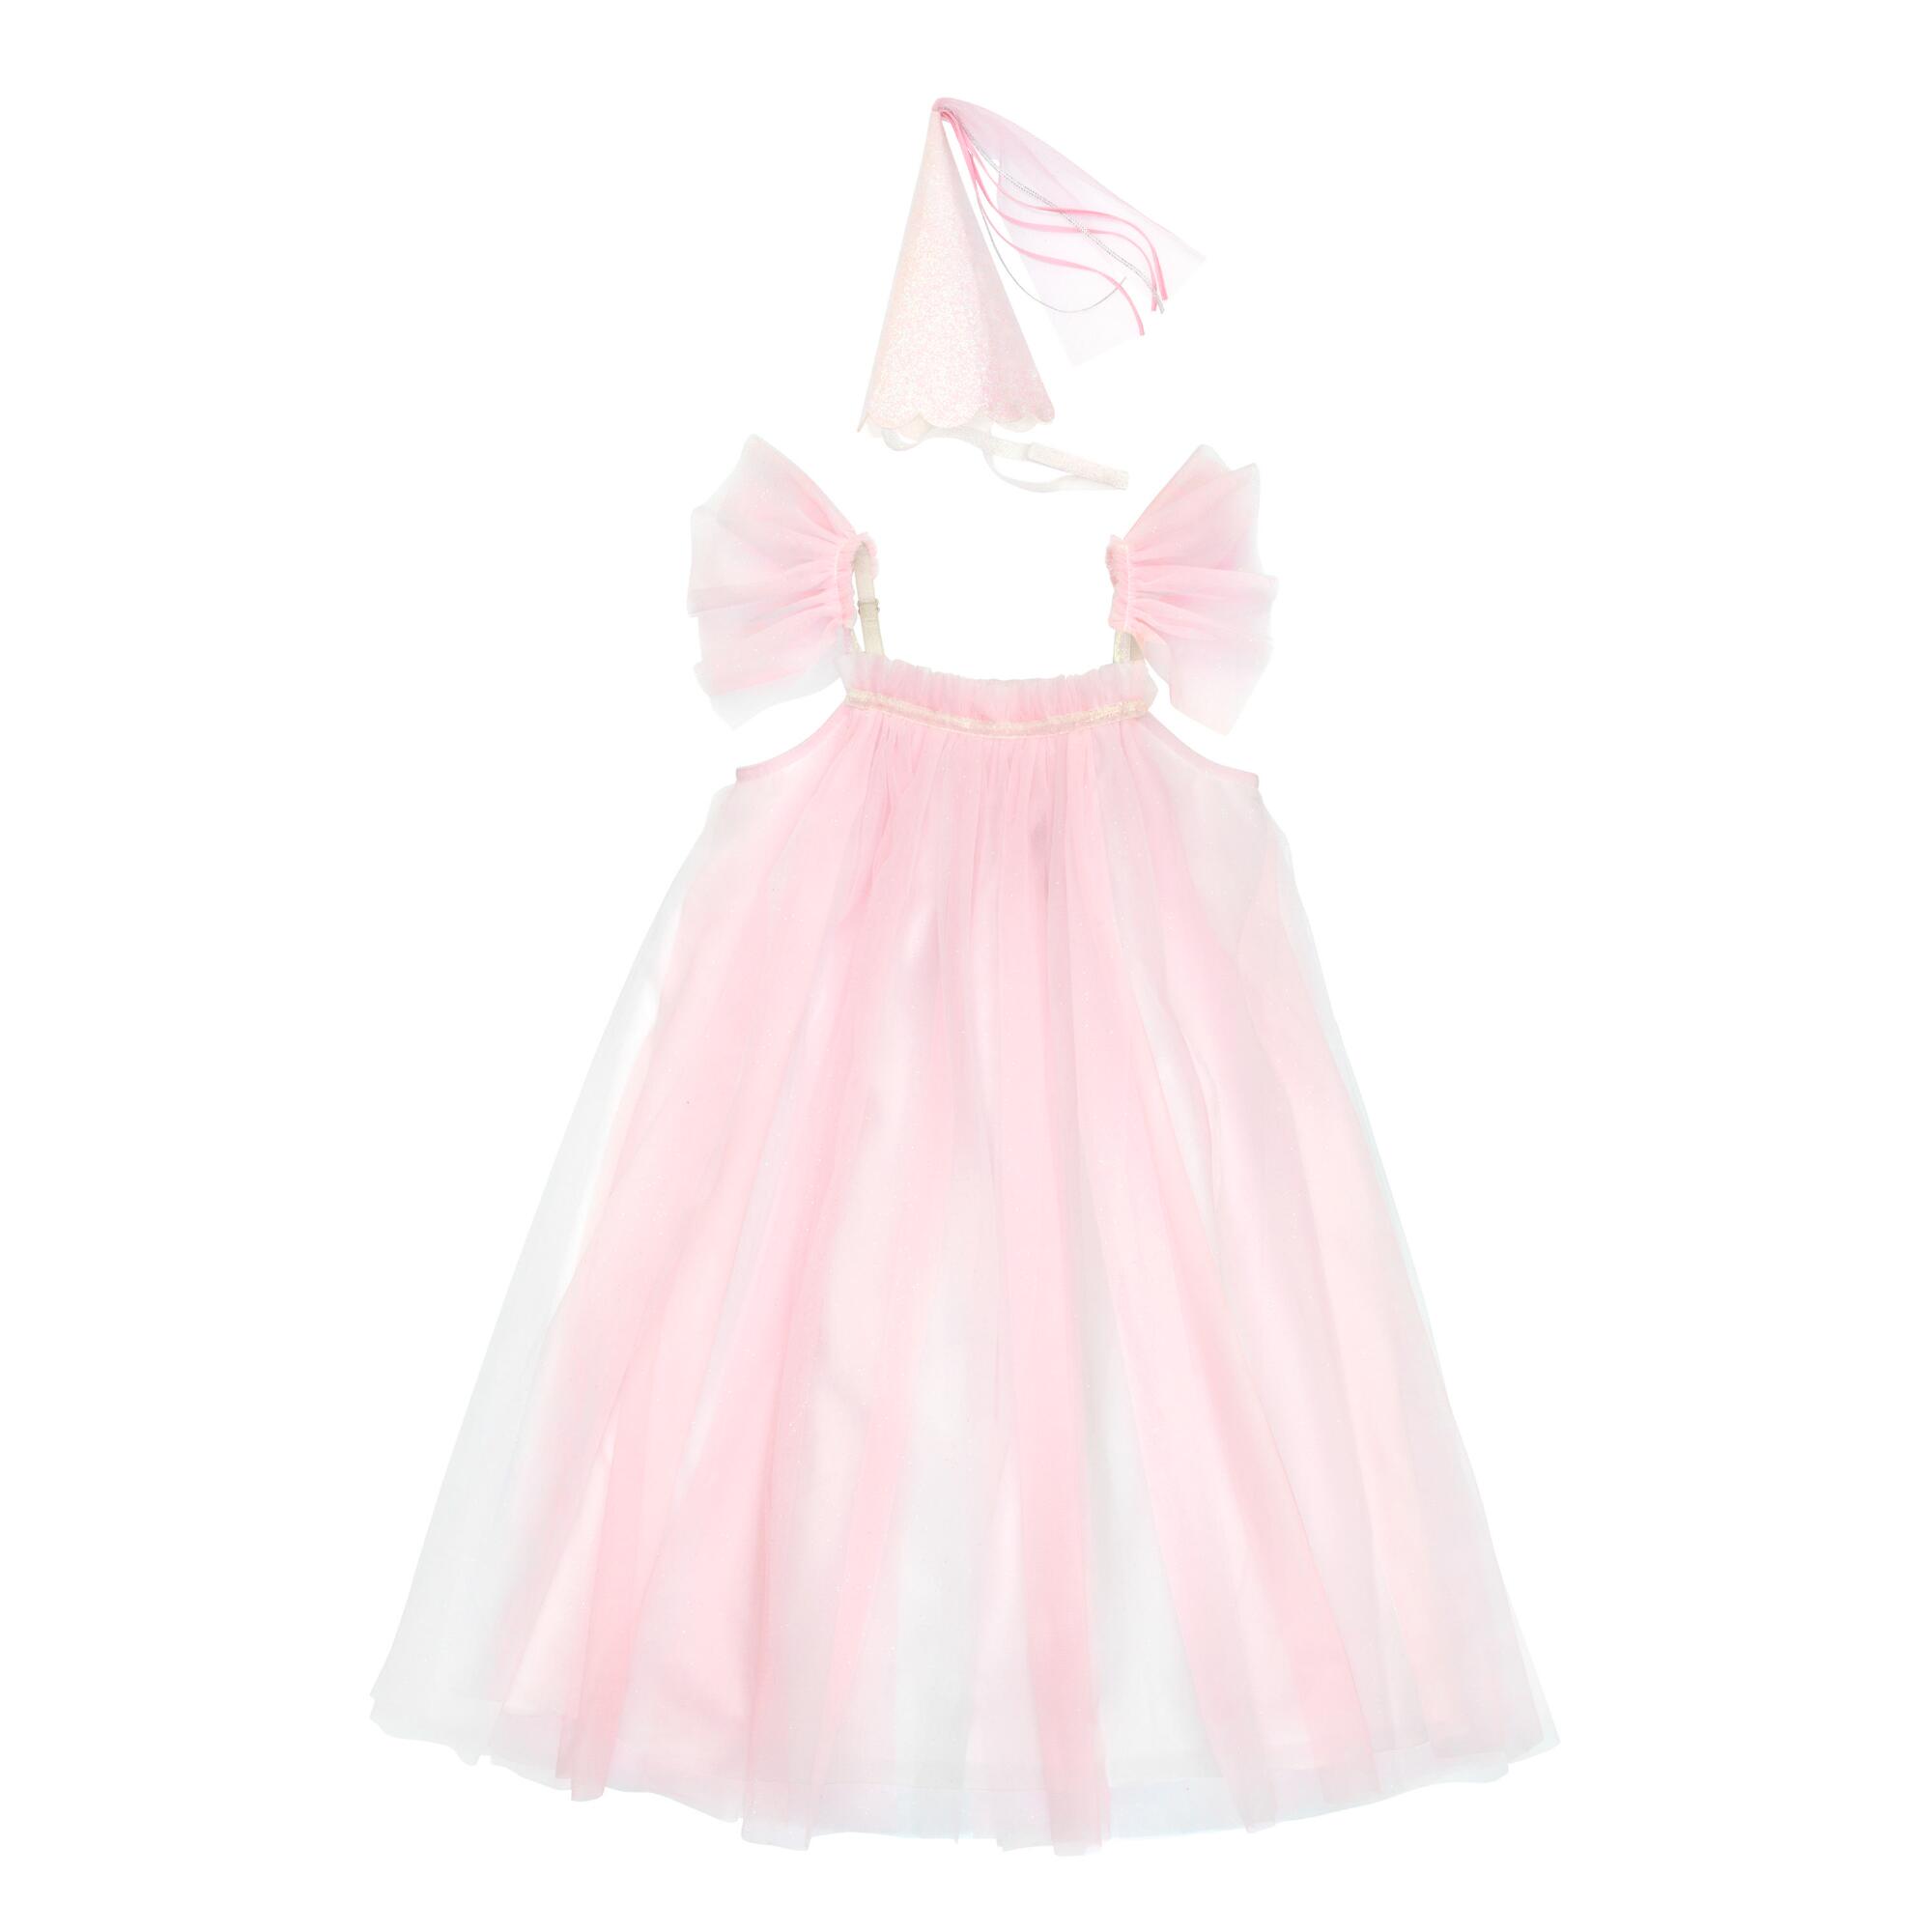 Meri Meri Kids Magical Princess Dress Up Costume by World Market